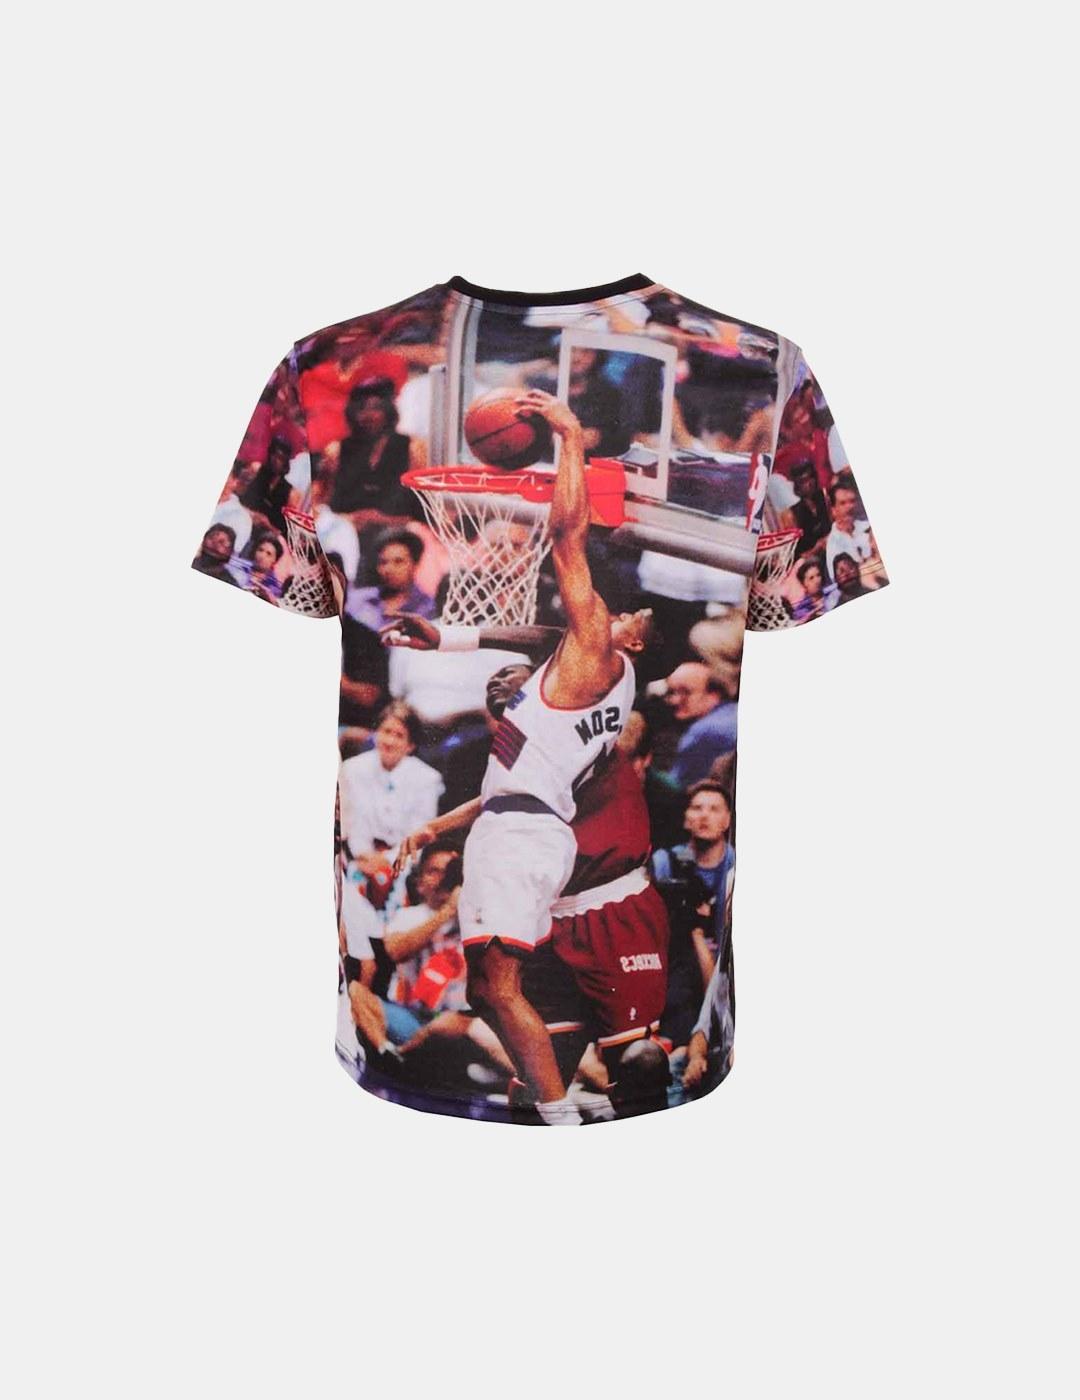 Camiseta Butnot Basket